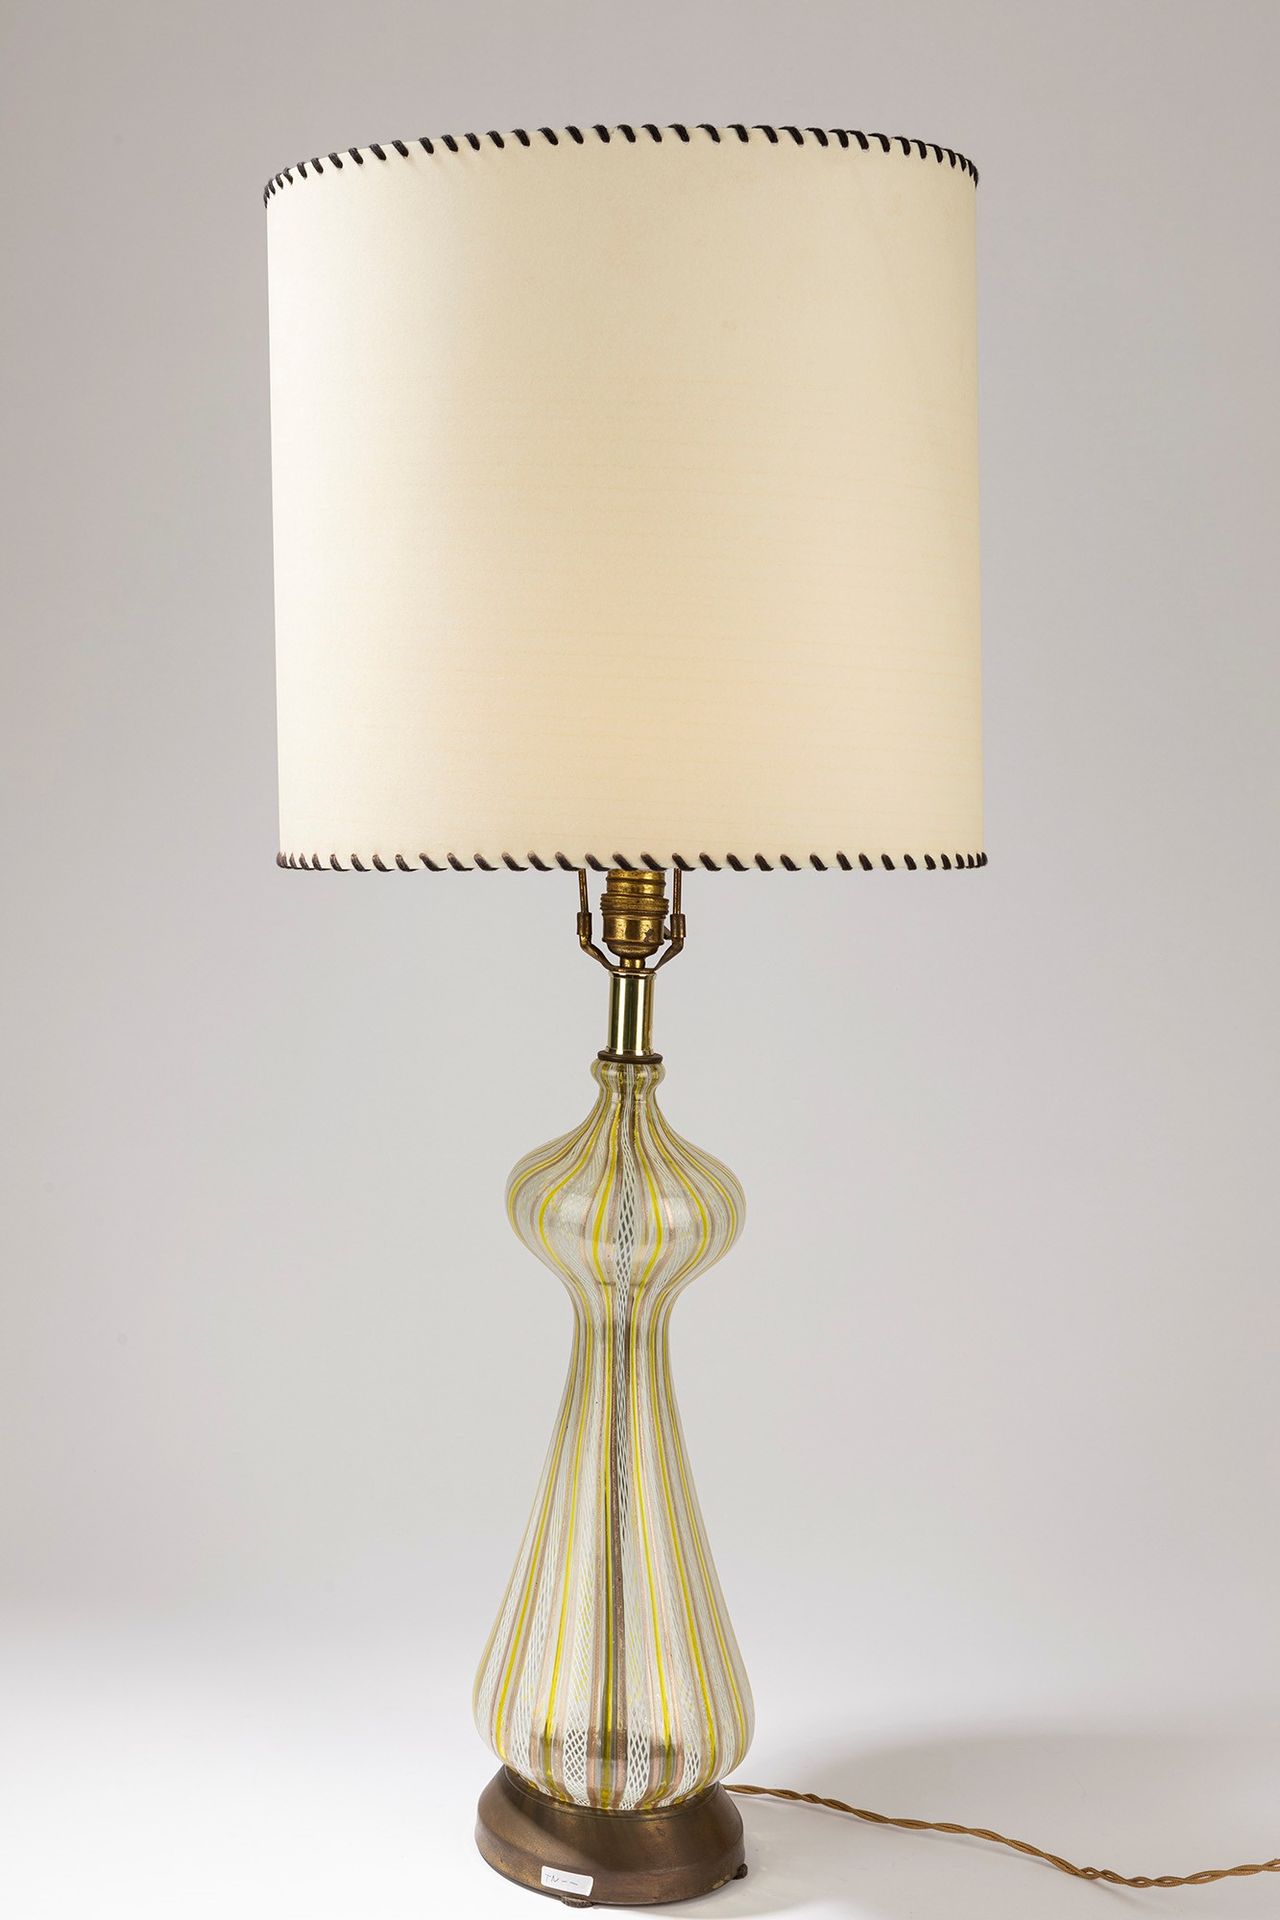 SEGUSO Table lamp, 30's period

dm 15 cm, H 82 cm
blown glass.